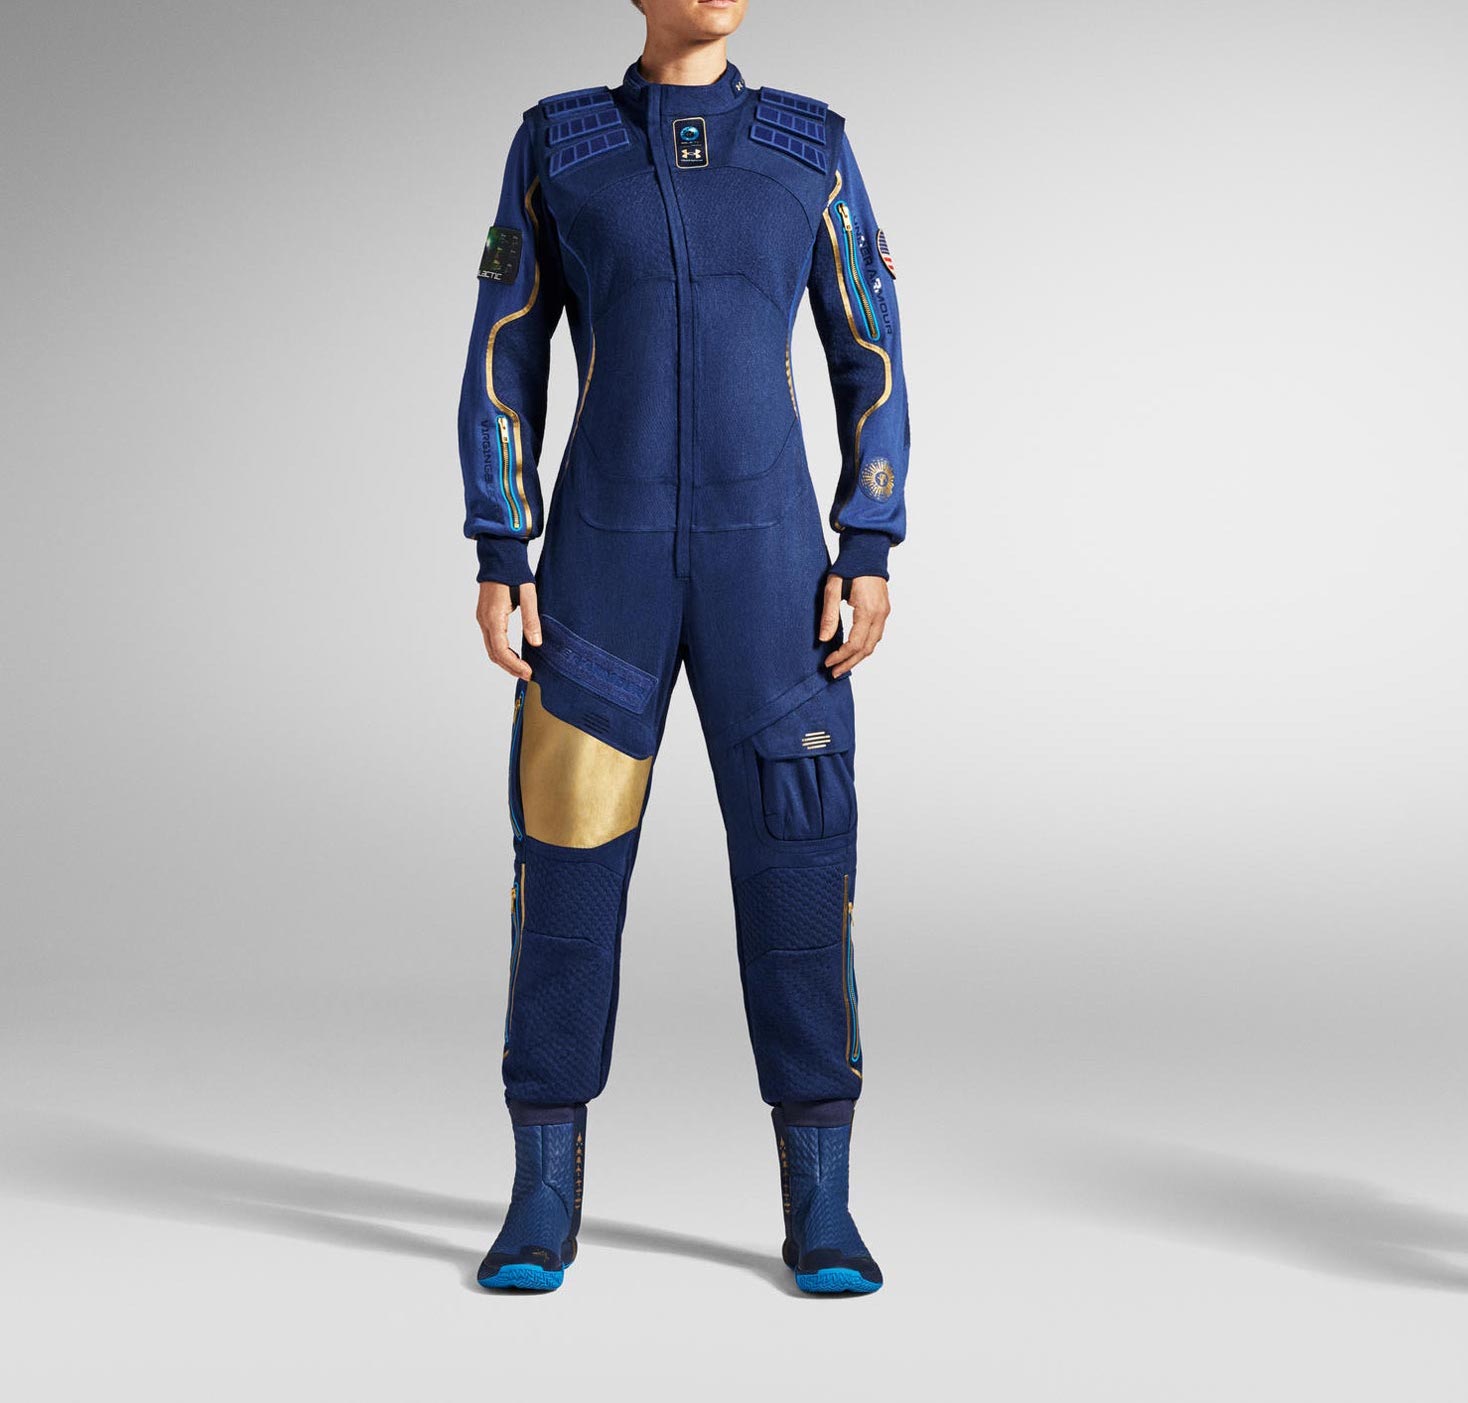 Under Armour Creates A Spacewear System For Virgin Galactic Future Astronauts